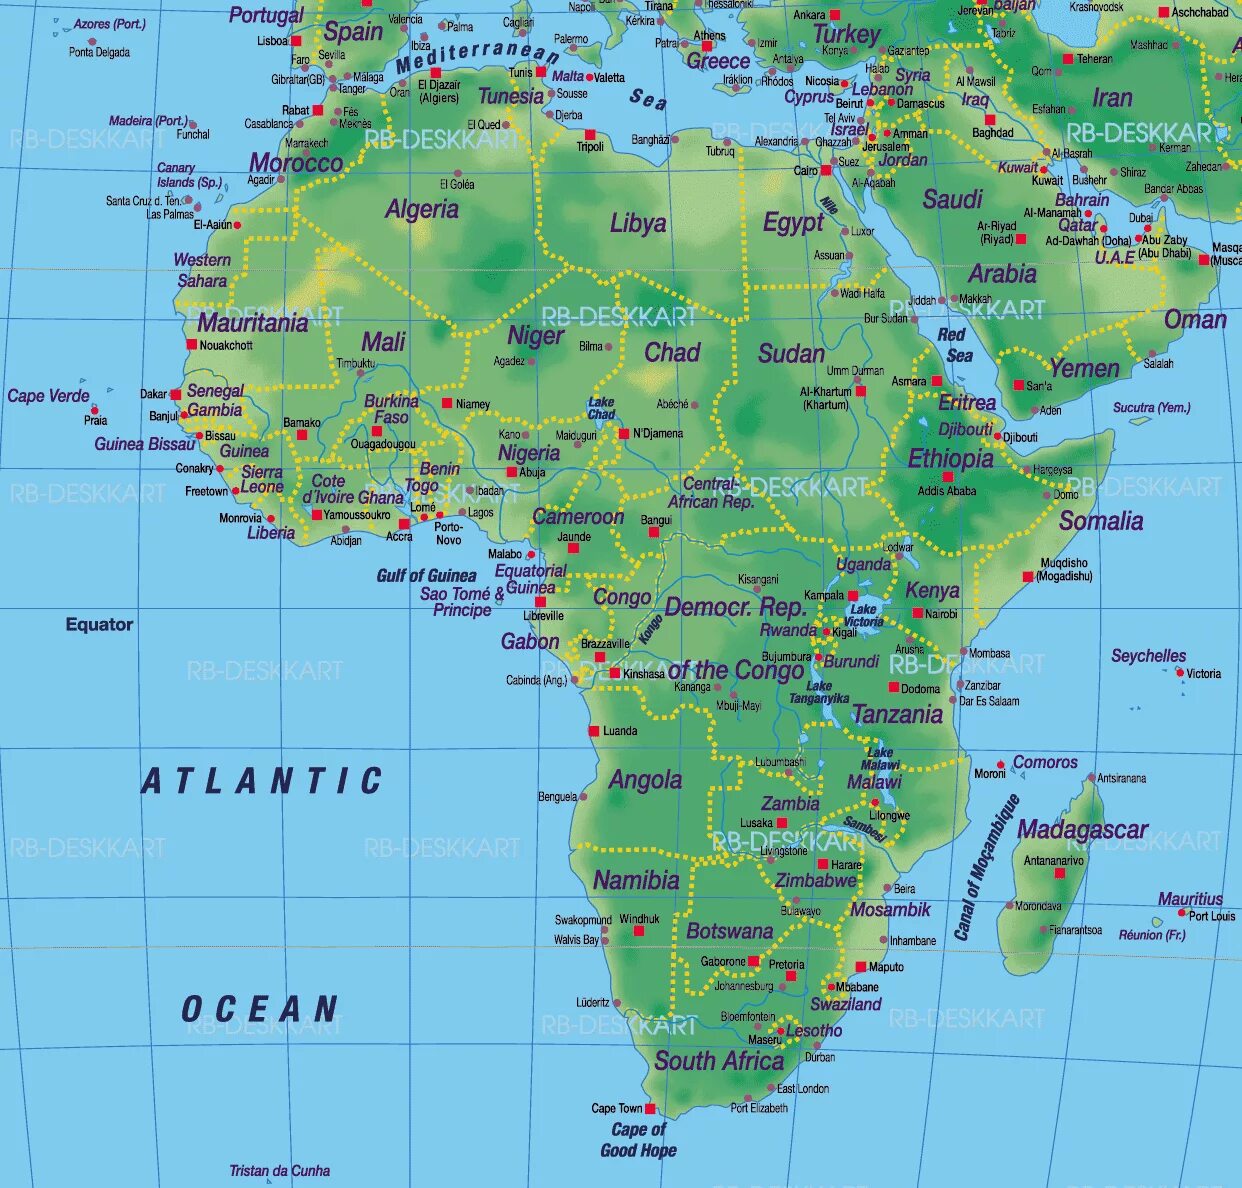 Города крупные морские порты африки. Морские Порты Египта Танзании ЮАР. Морские Порты Африки на карте. Крупнейшие морские Порты Африки. Крупнейшие морские Порты Африки на карте.